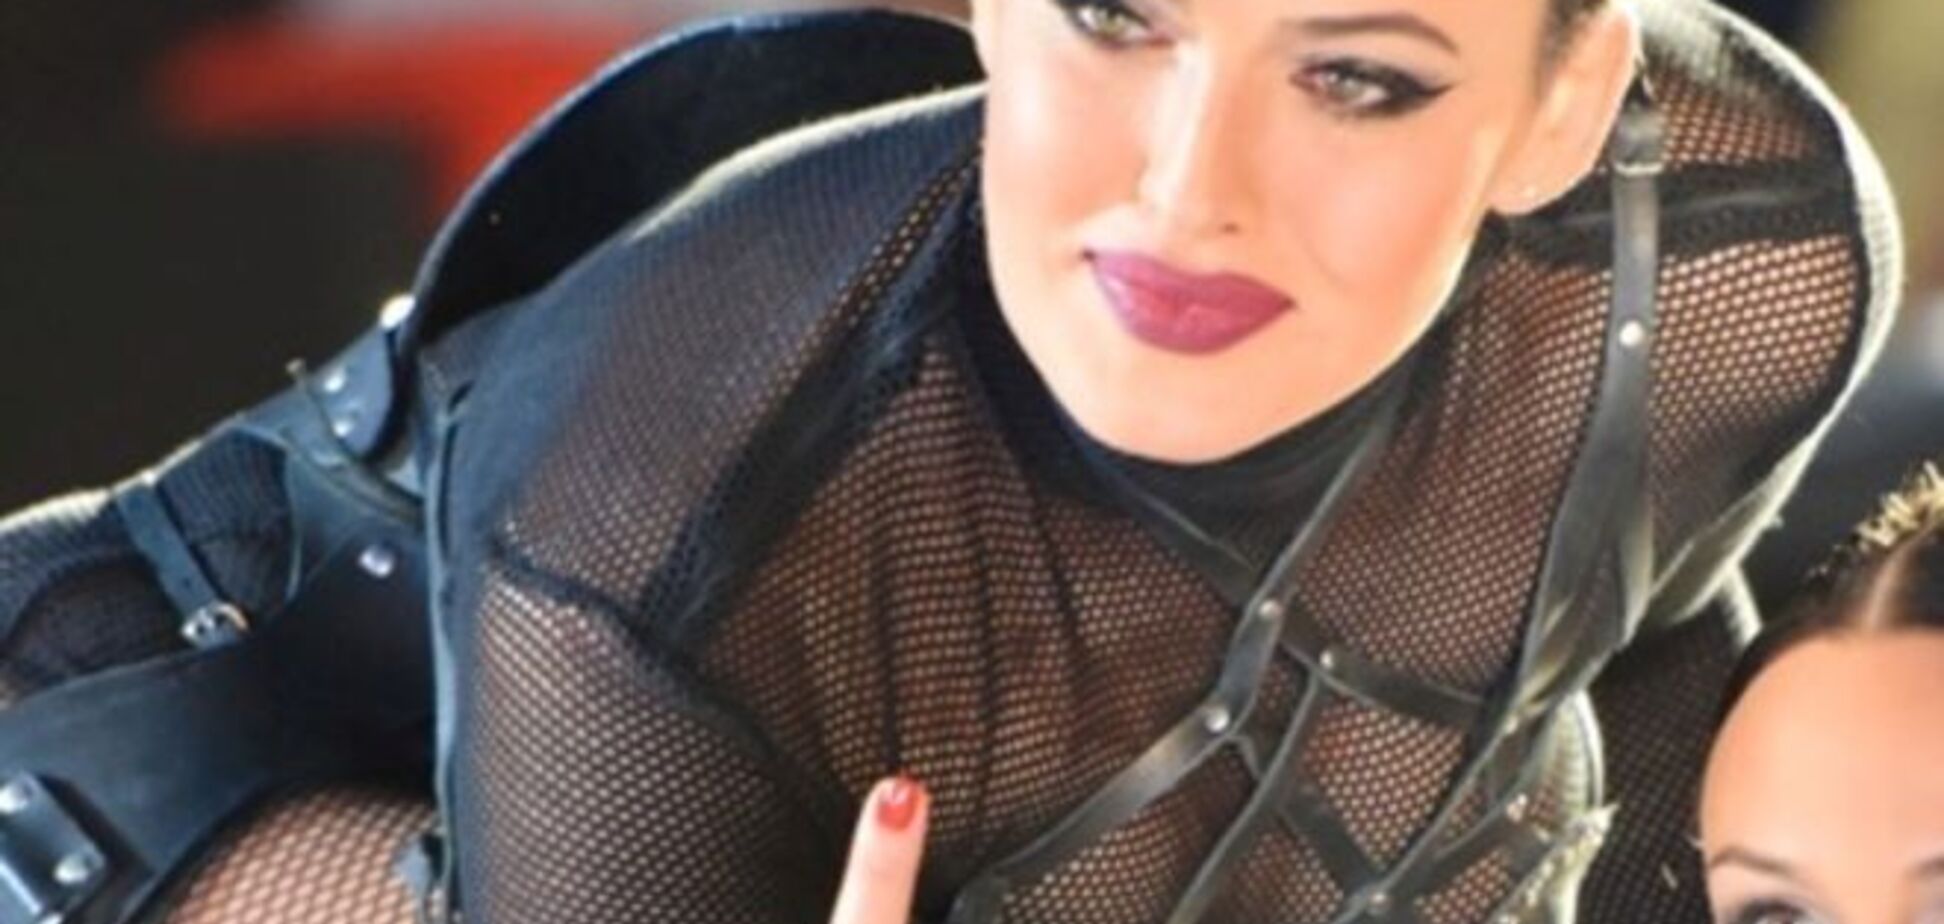 Даша Астафьева в садо-мазо образе показала фанатам средний палец